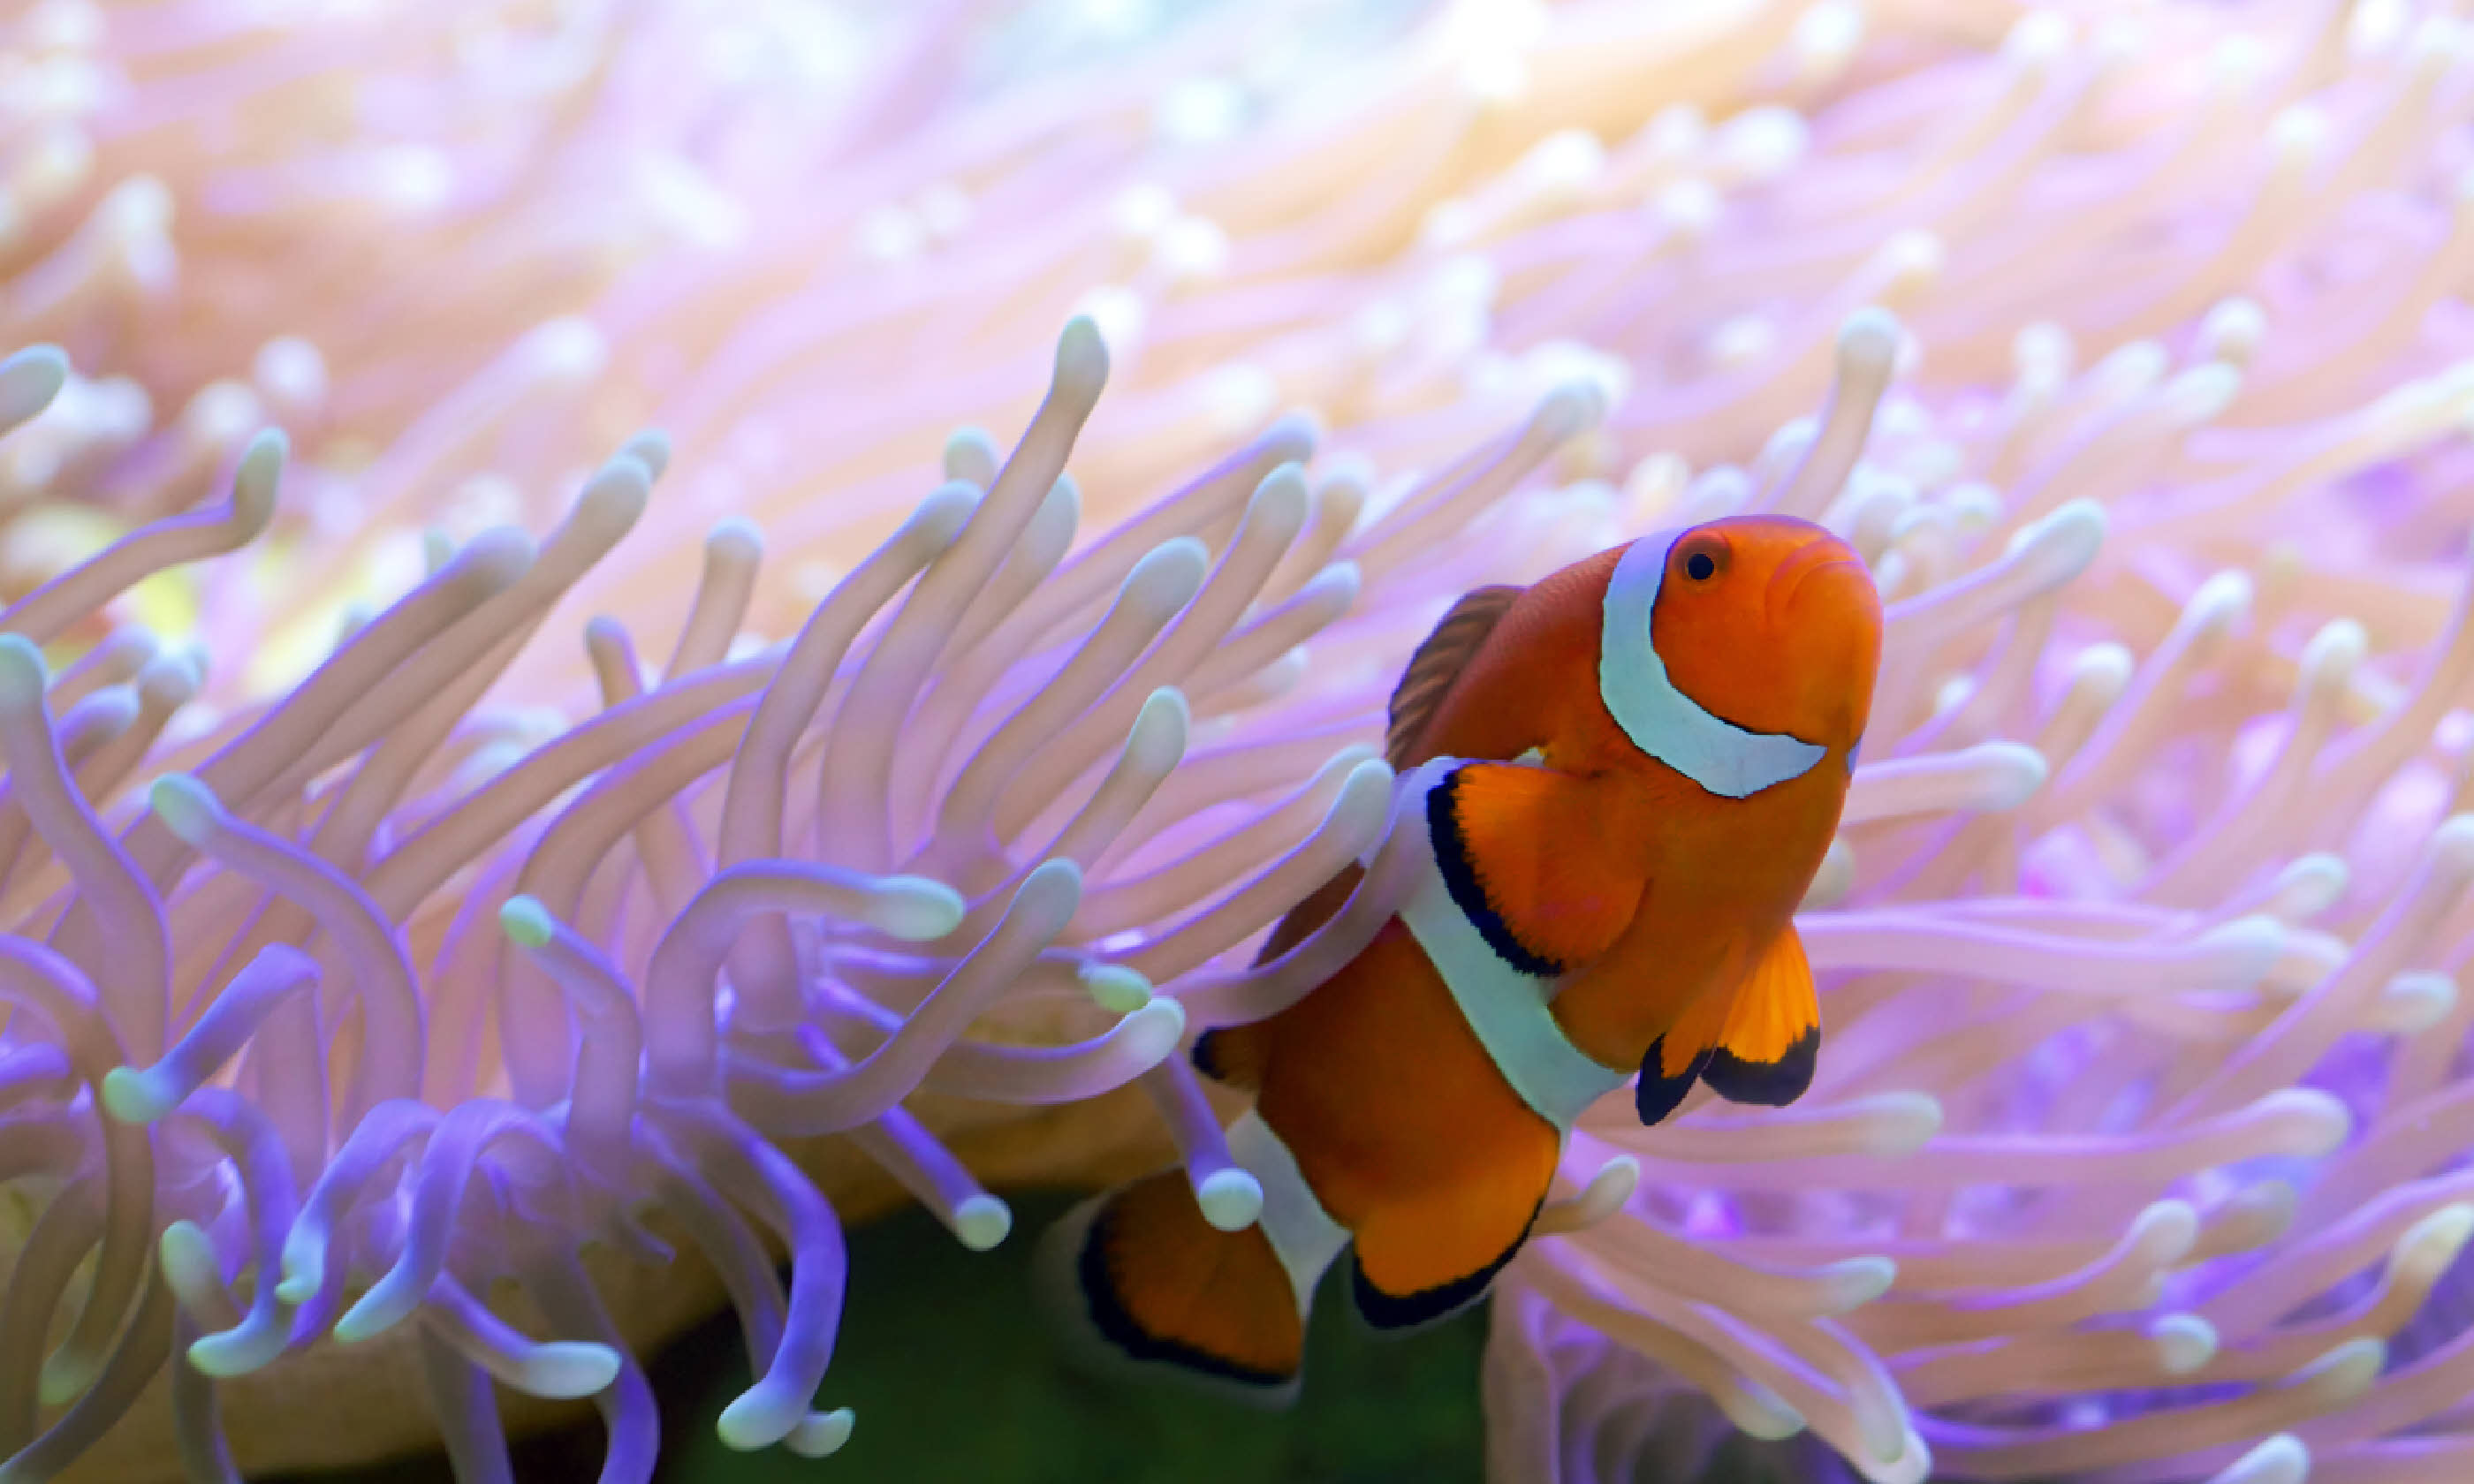 Clown fish hiding in colorful anemone (Shutterstock)